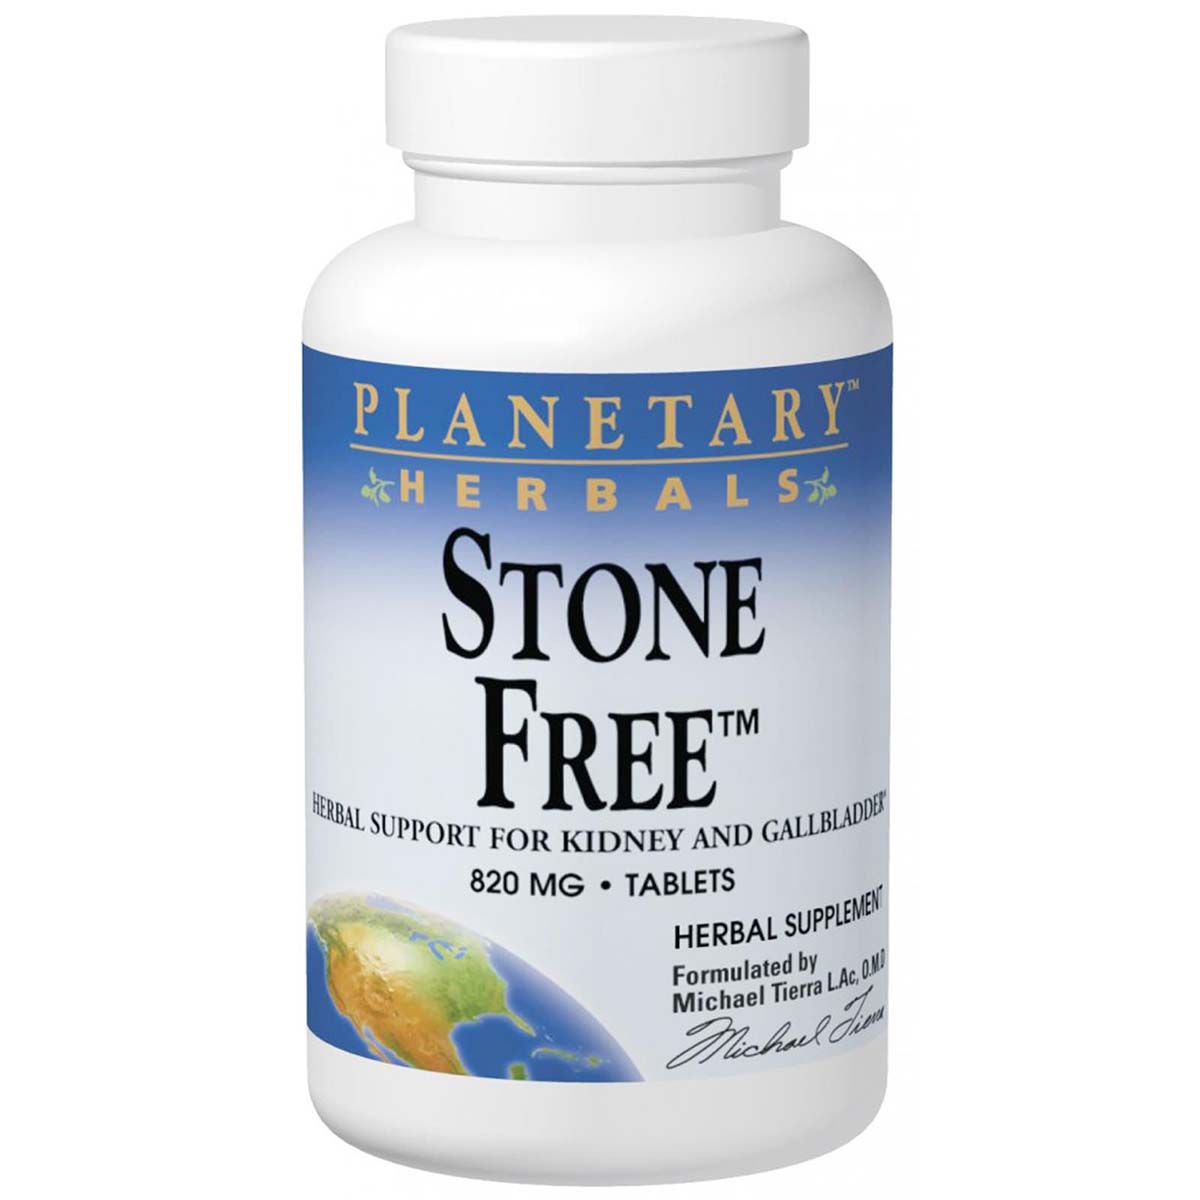 Planetary Herbals Stone Free 90 Tablets 820 mg